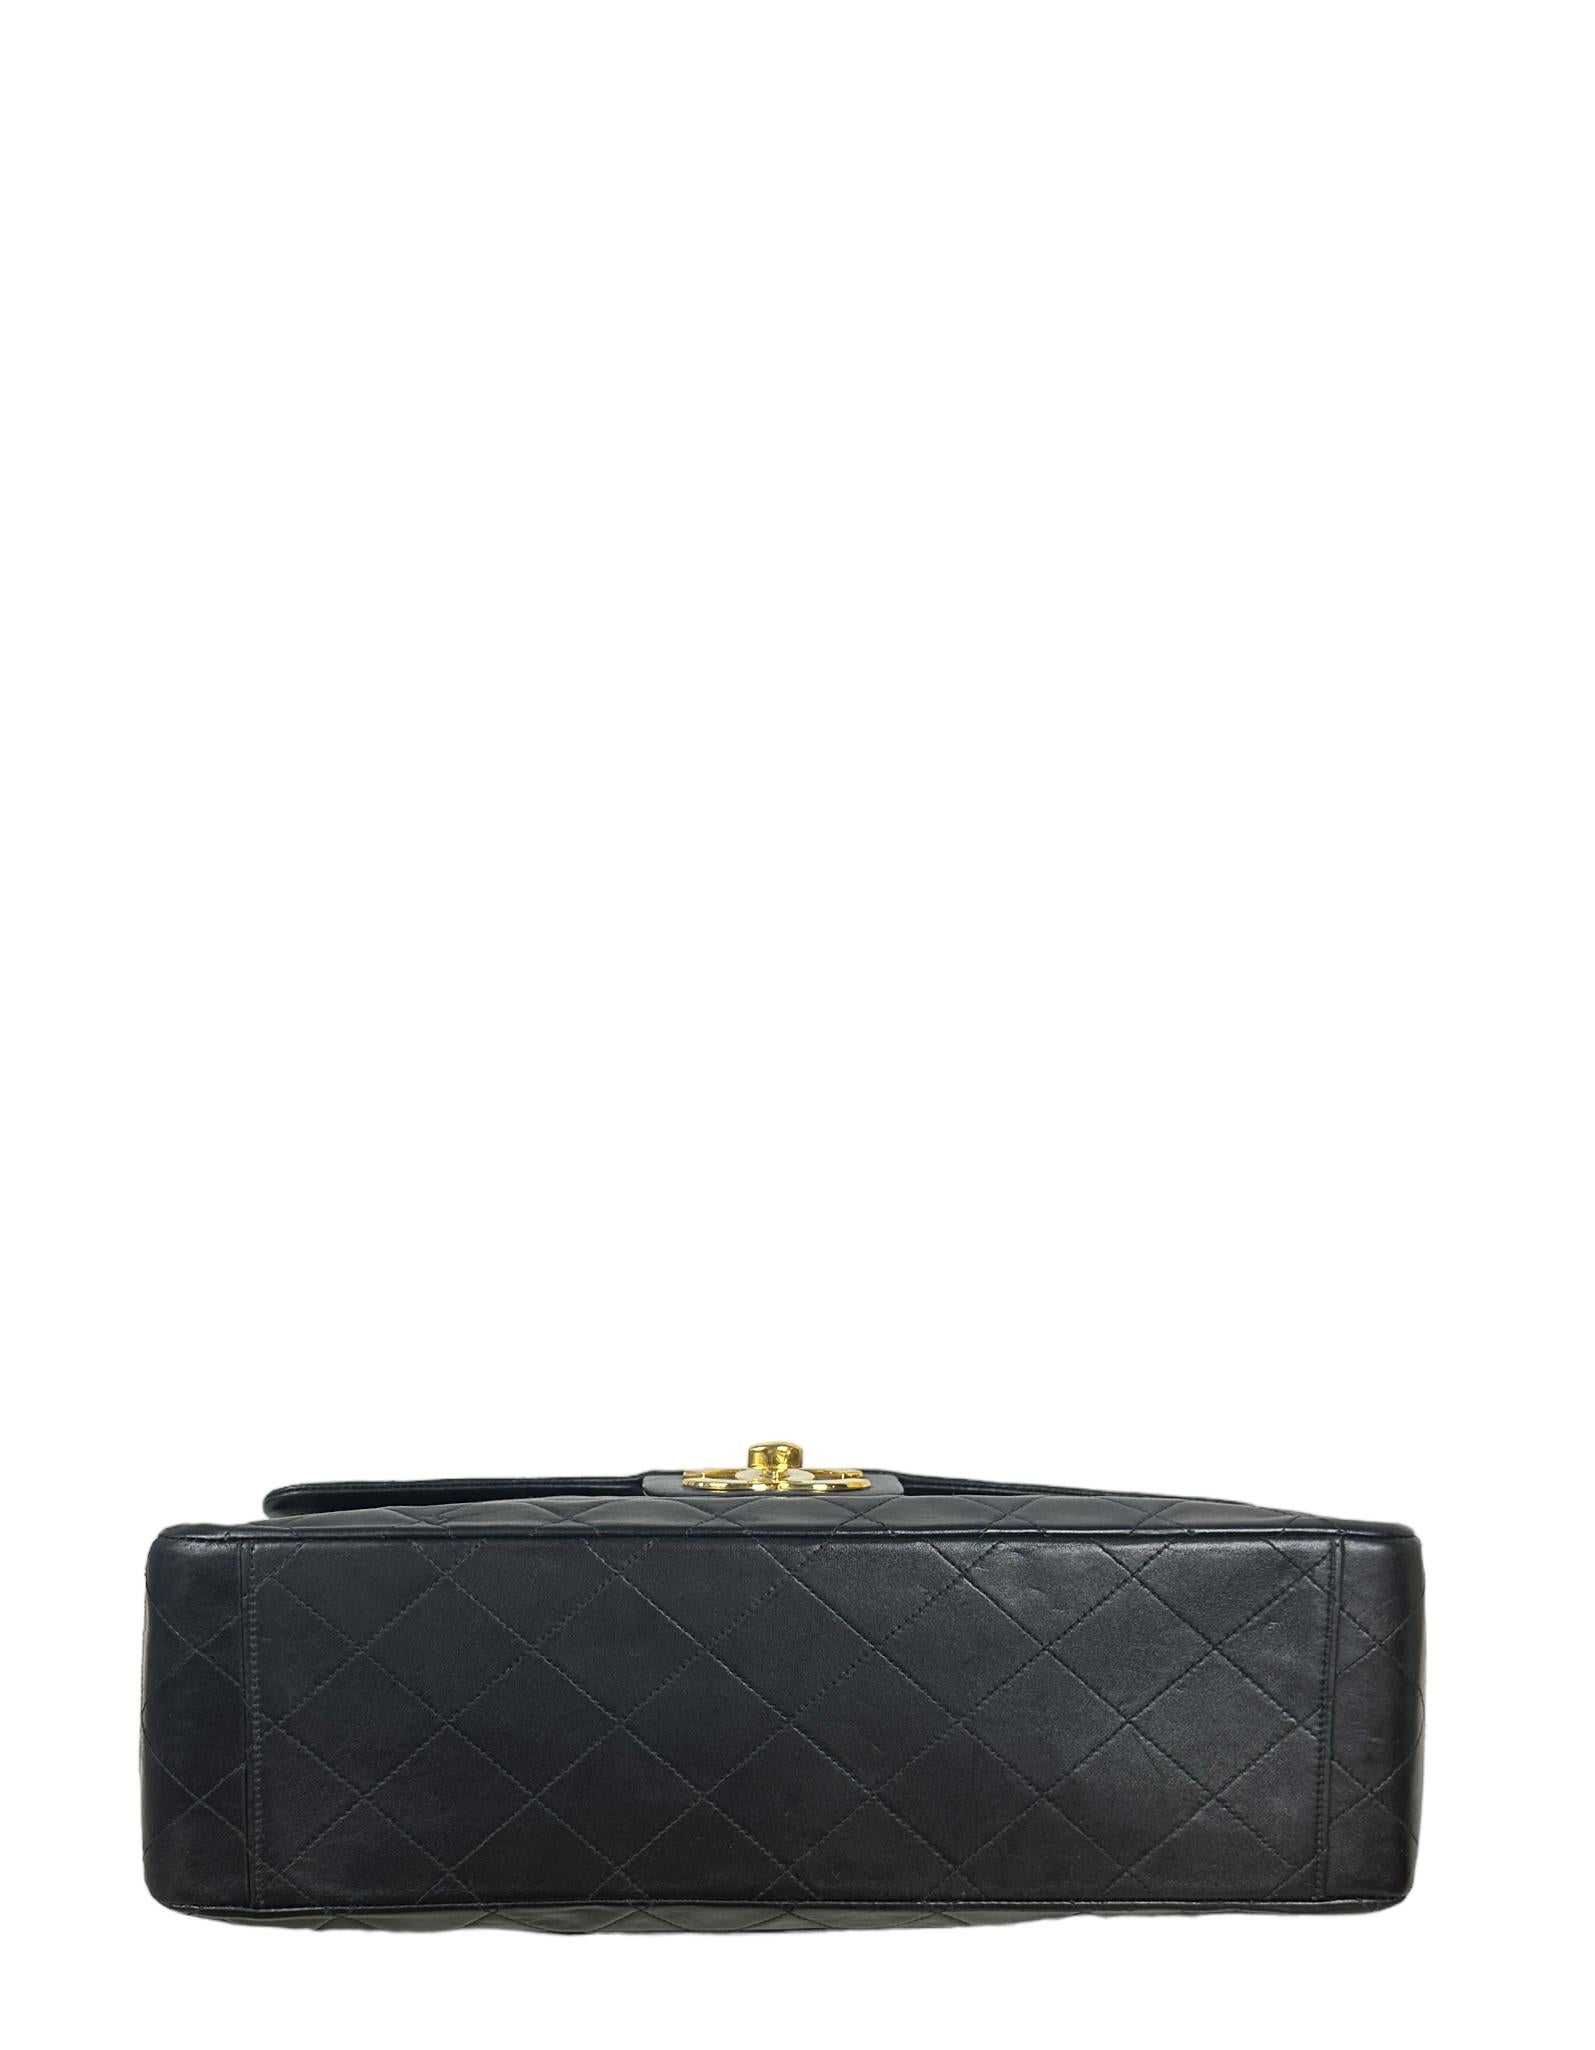 Women's Chanel Vintage 1990s Black Lambskin Leather XL Jumbo Flap Bag For Sale